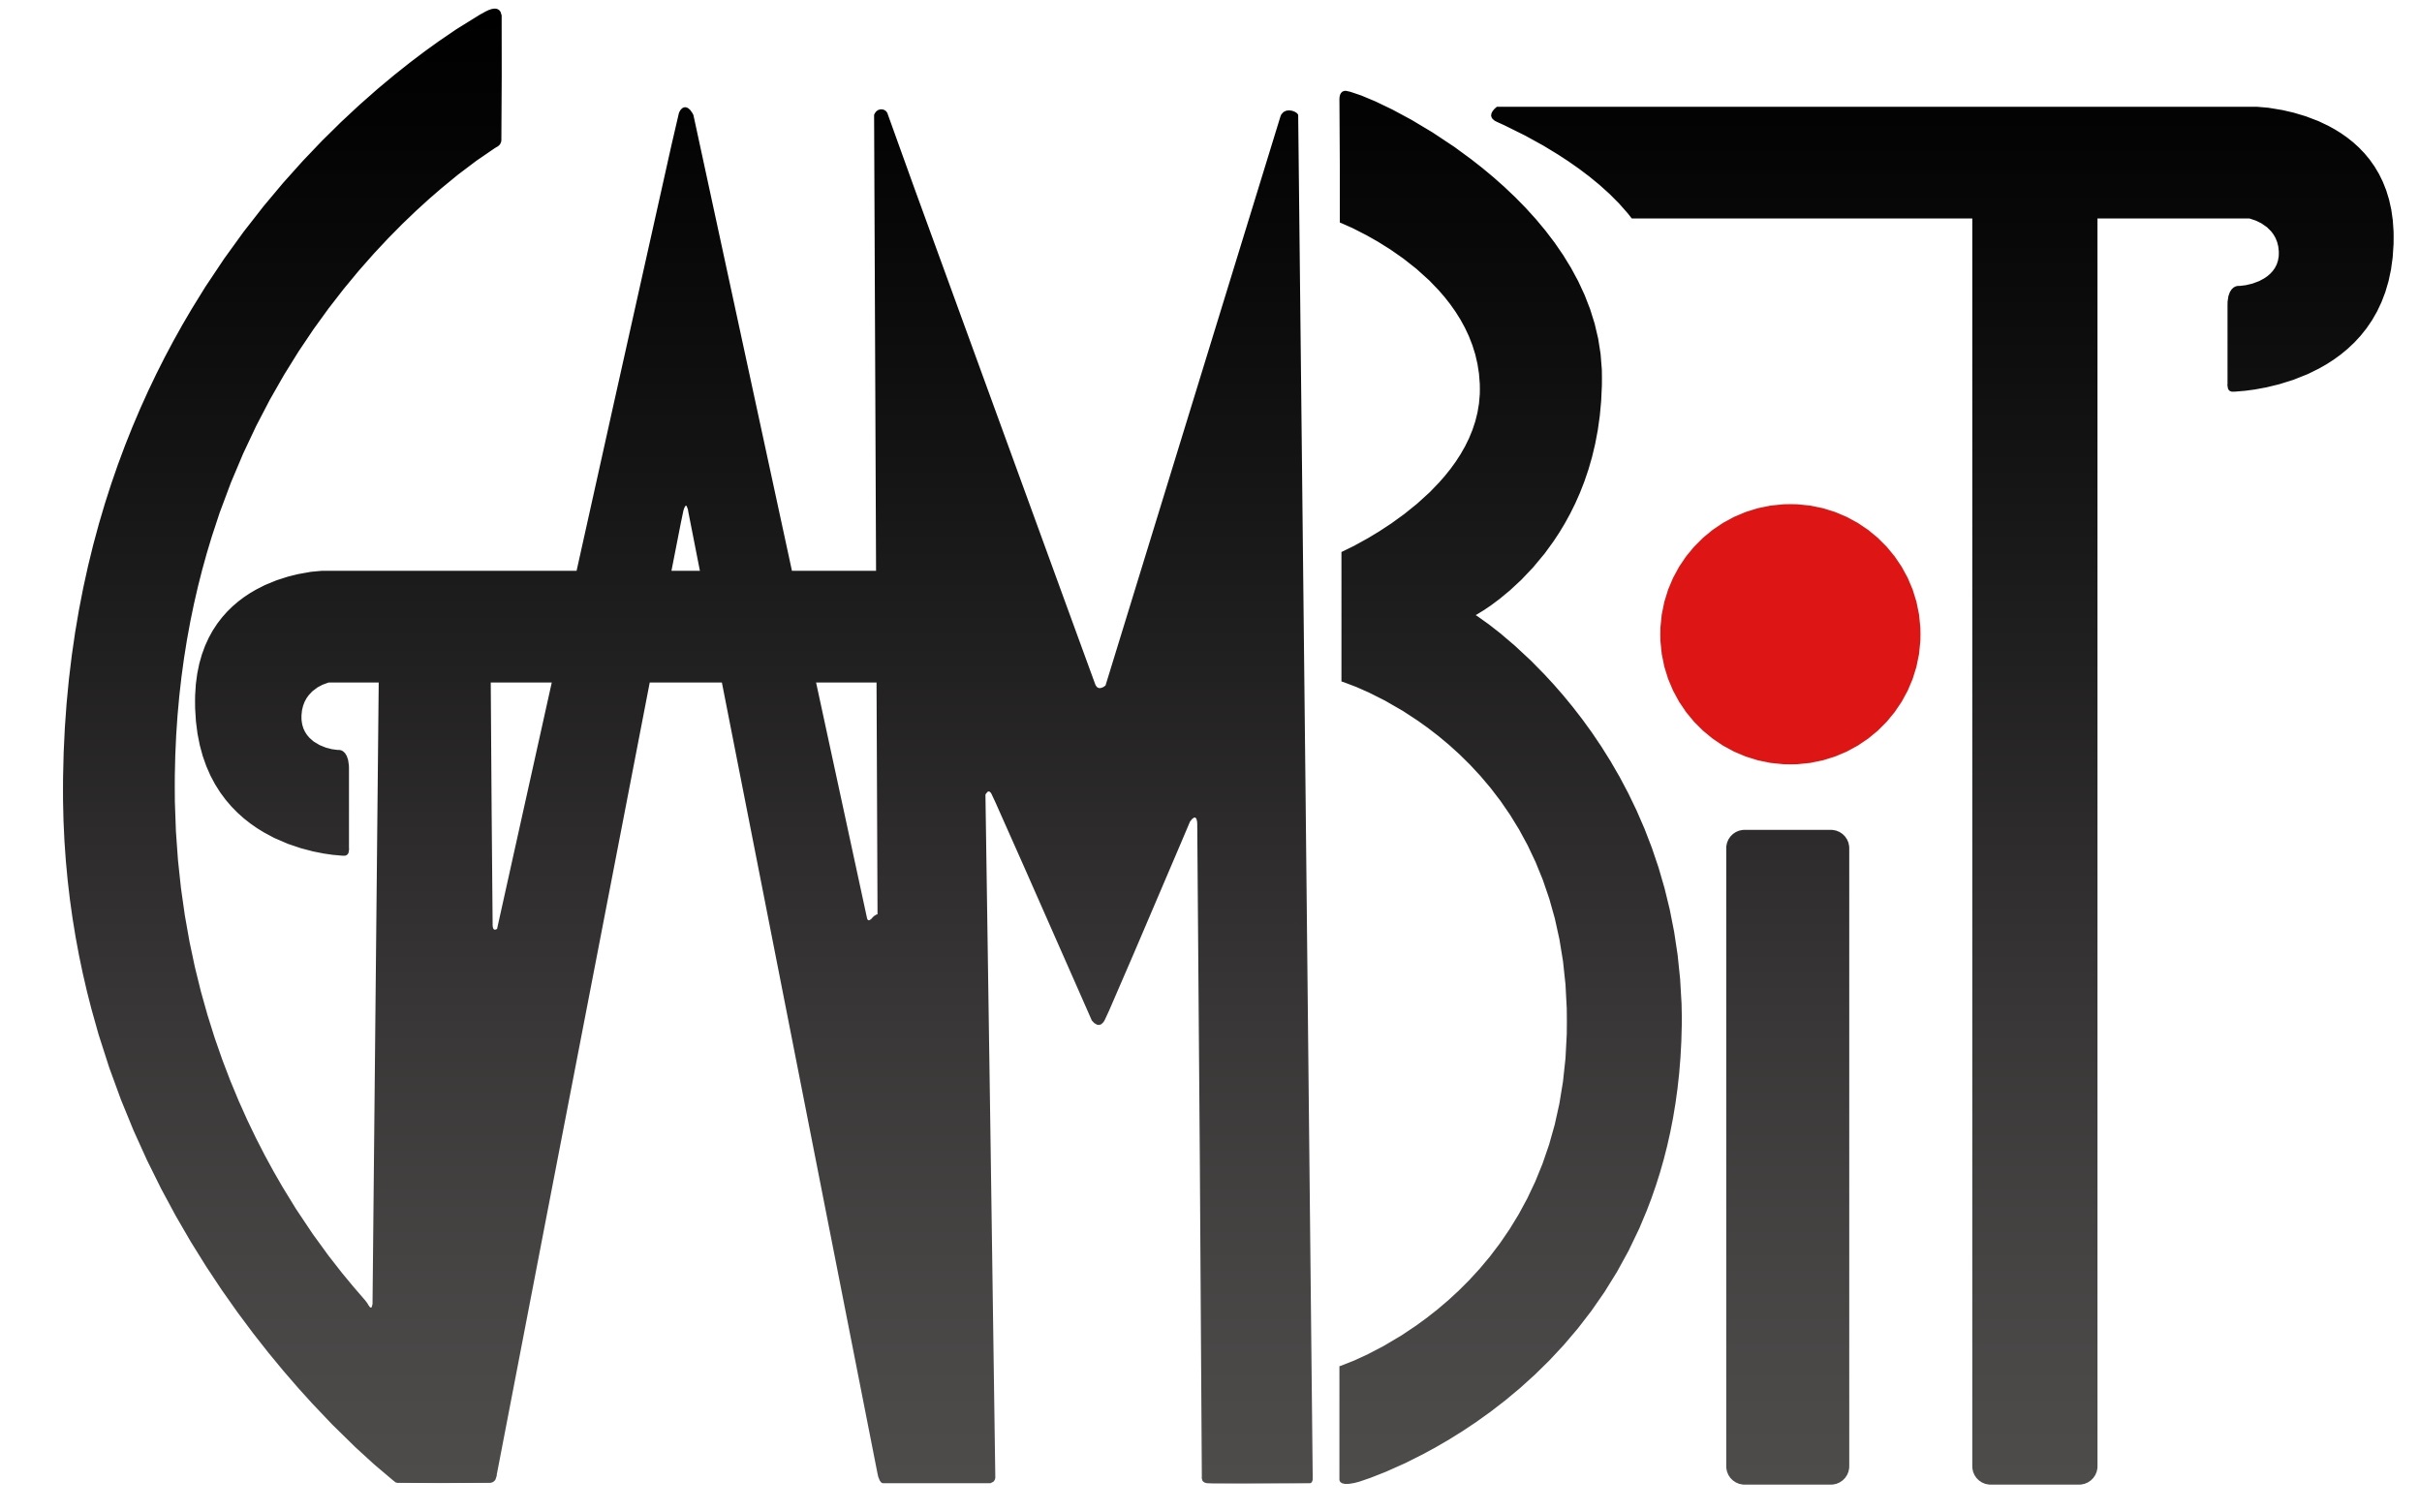 GAMBIT Logo.jpg cc312638e0faeeb03221b9ba6cfab447